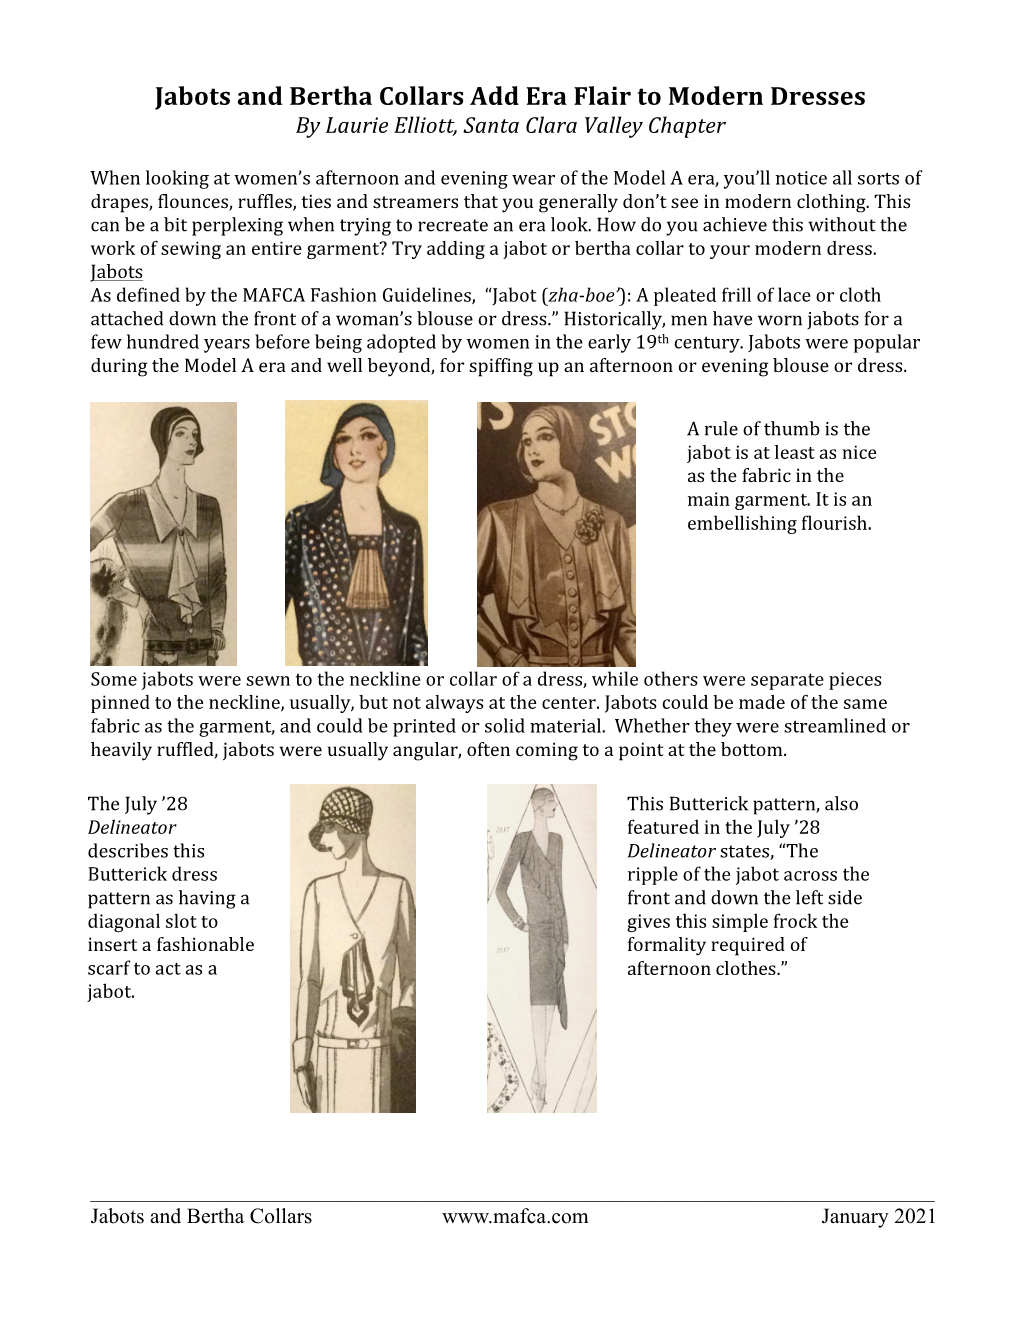 Jabots and Bertha Collars Add Era Flair to Modern Dresses by Laurie Elliott, Santa Clara Valley Chapter